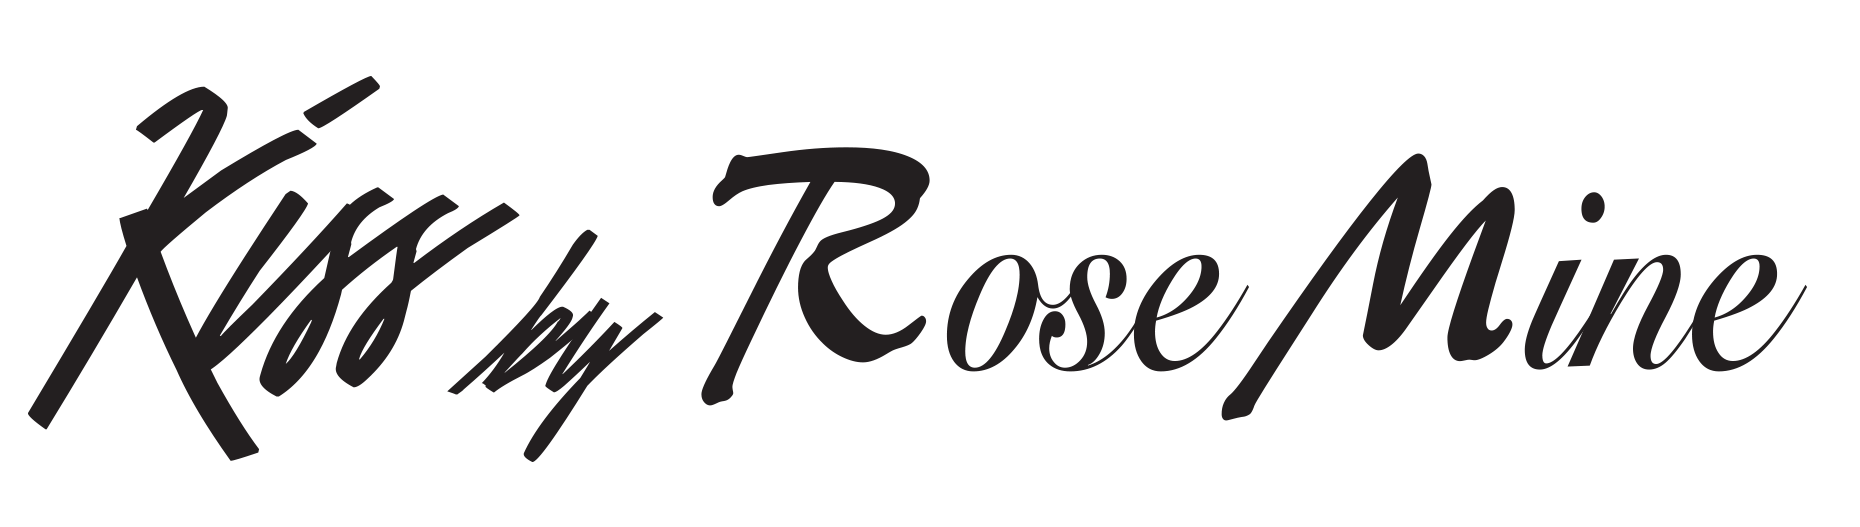 Kiss by Rosemine